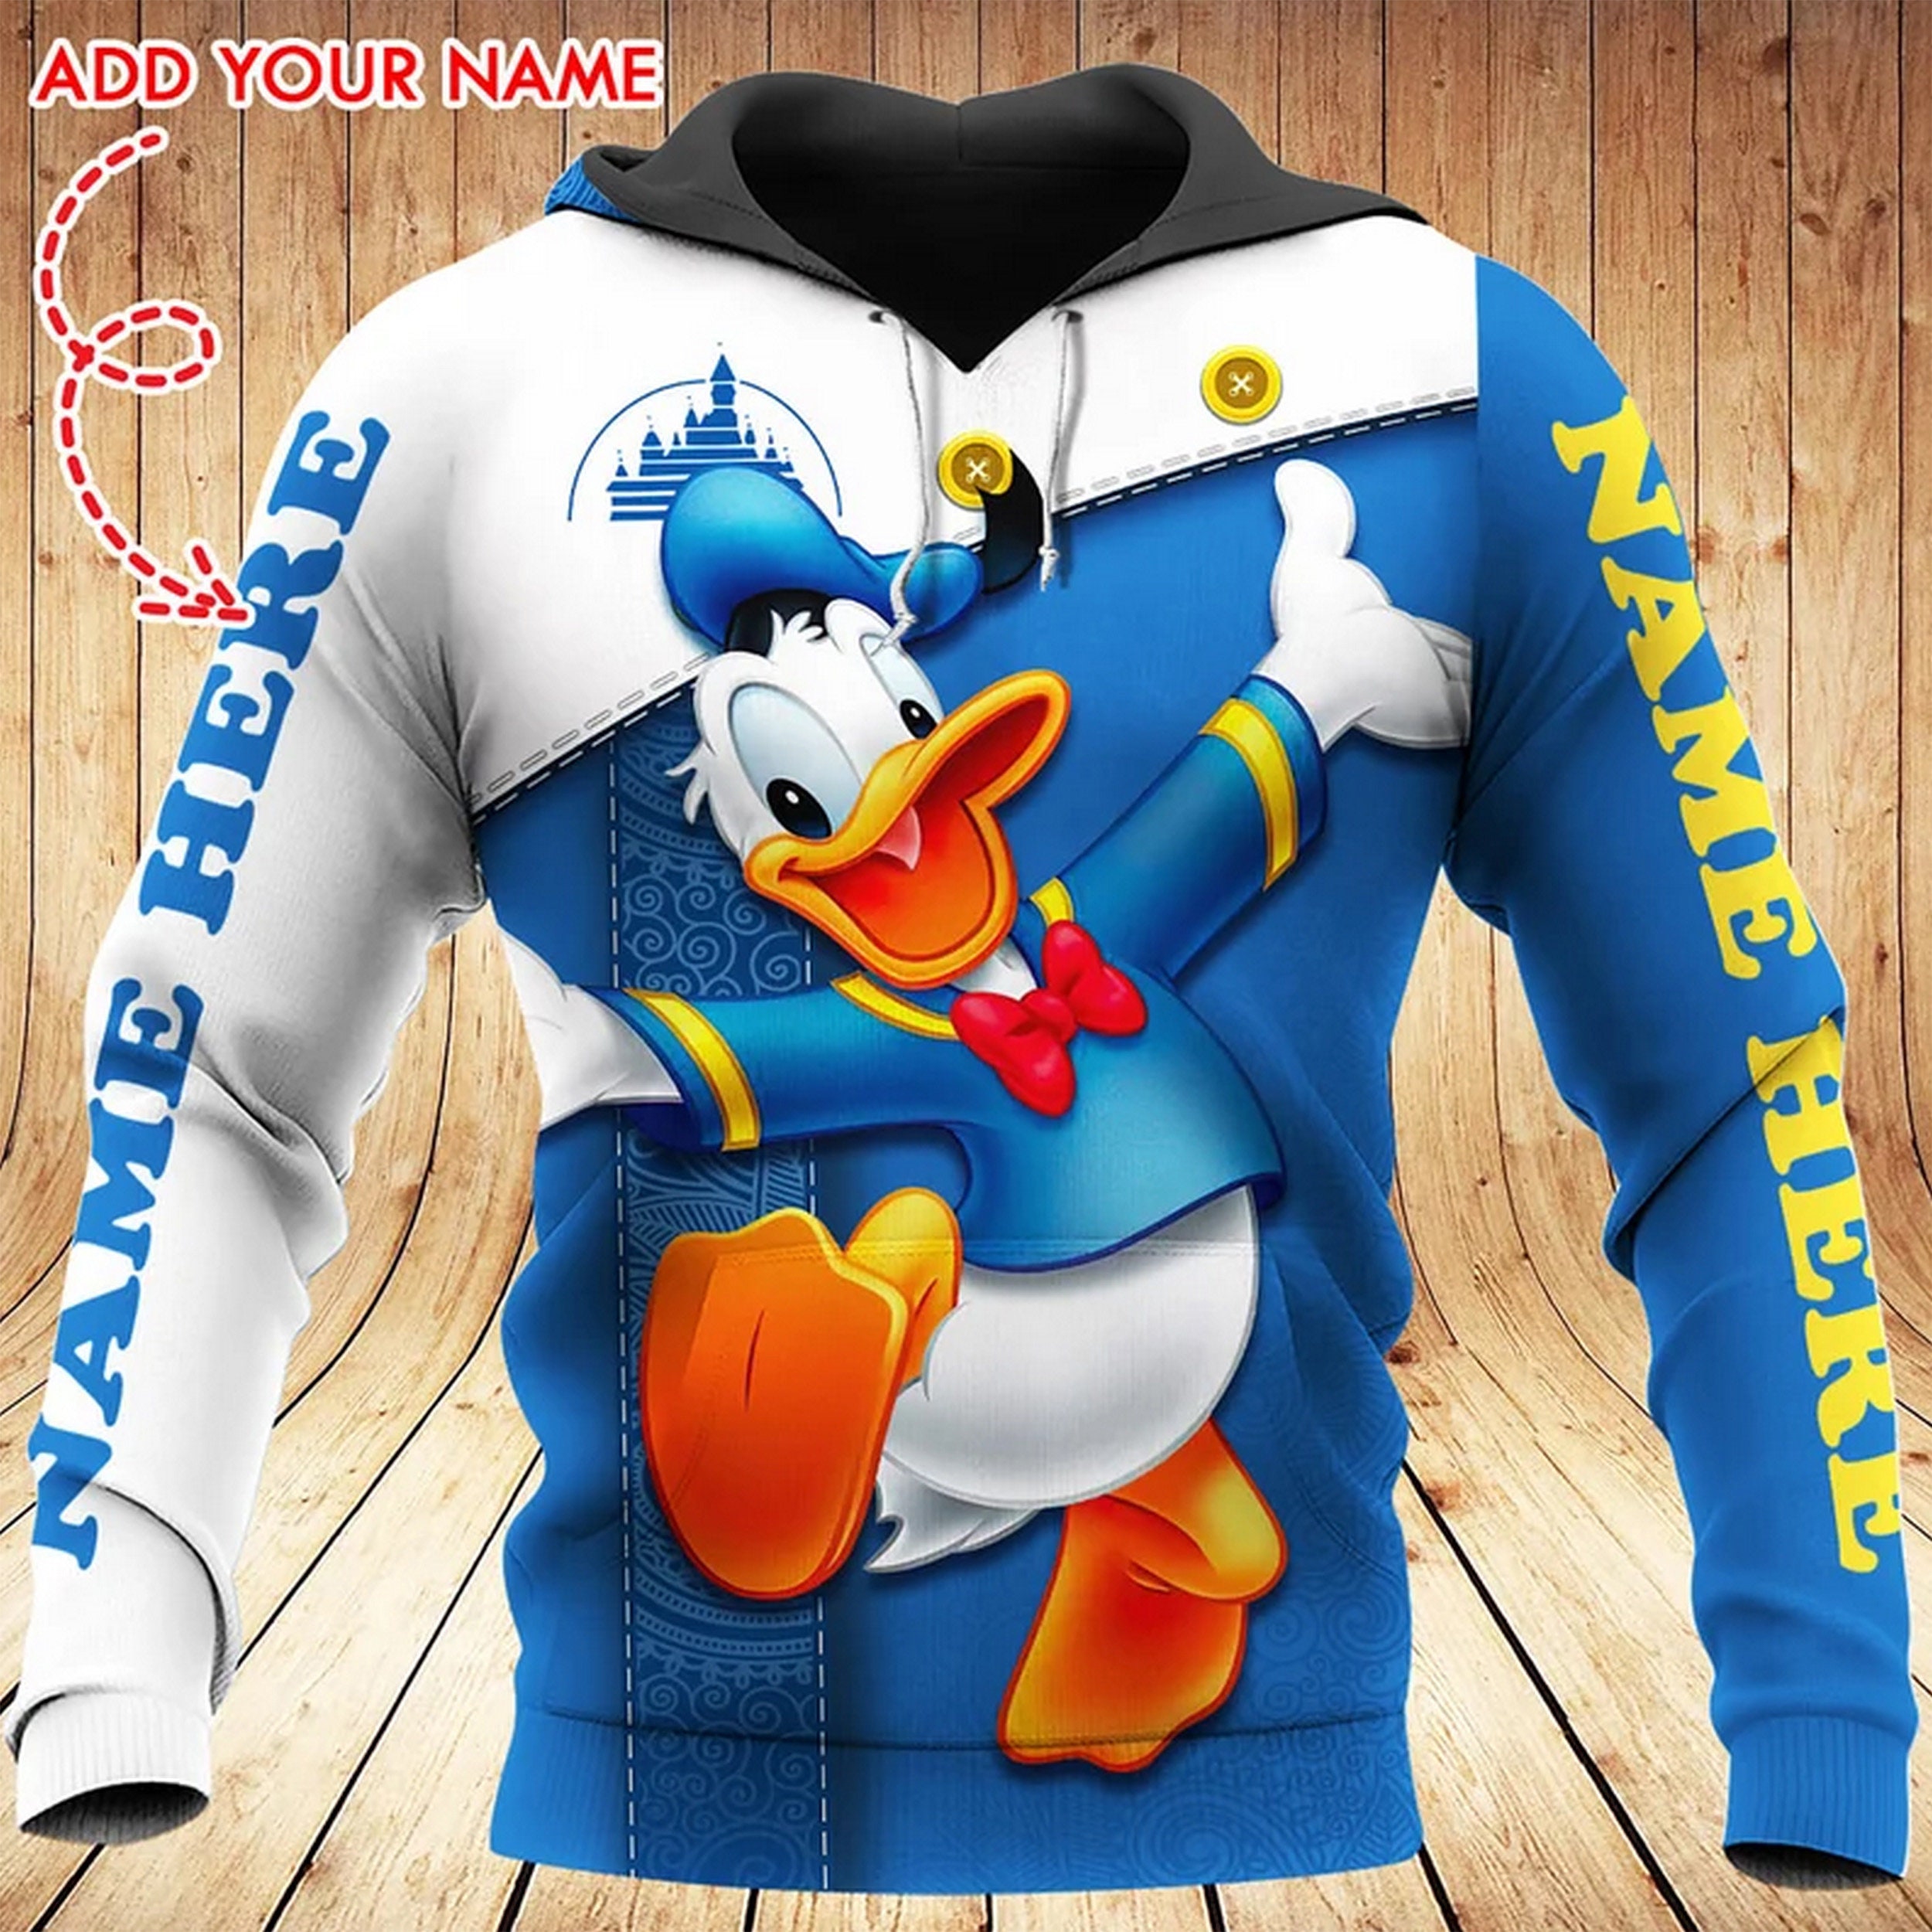 Donald duck custom hoodies, personalized name hoodies, unisex disney hoodies, mickey mouse hoodies, disneyland hoodies, disneyworld hoodies